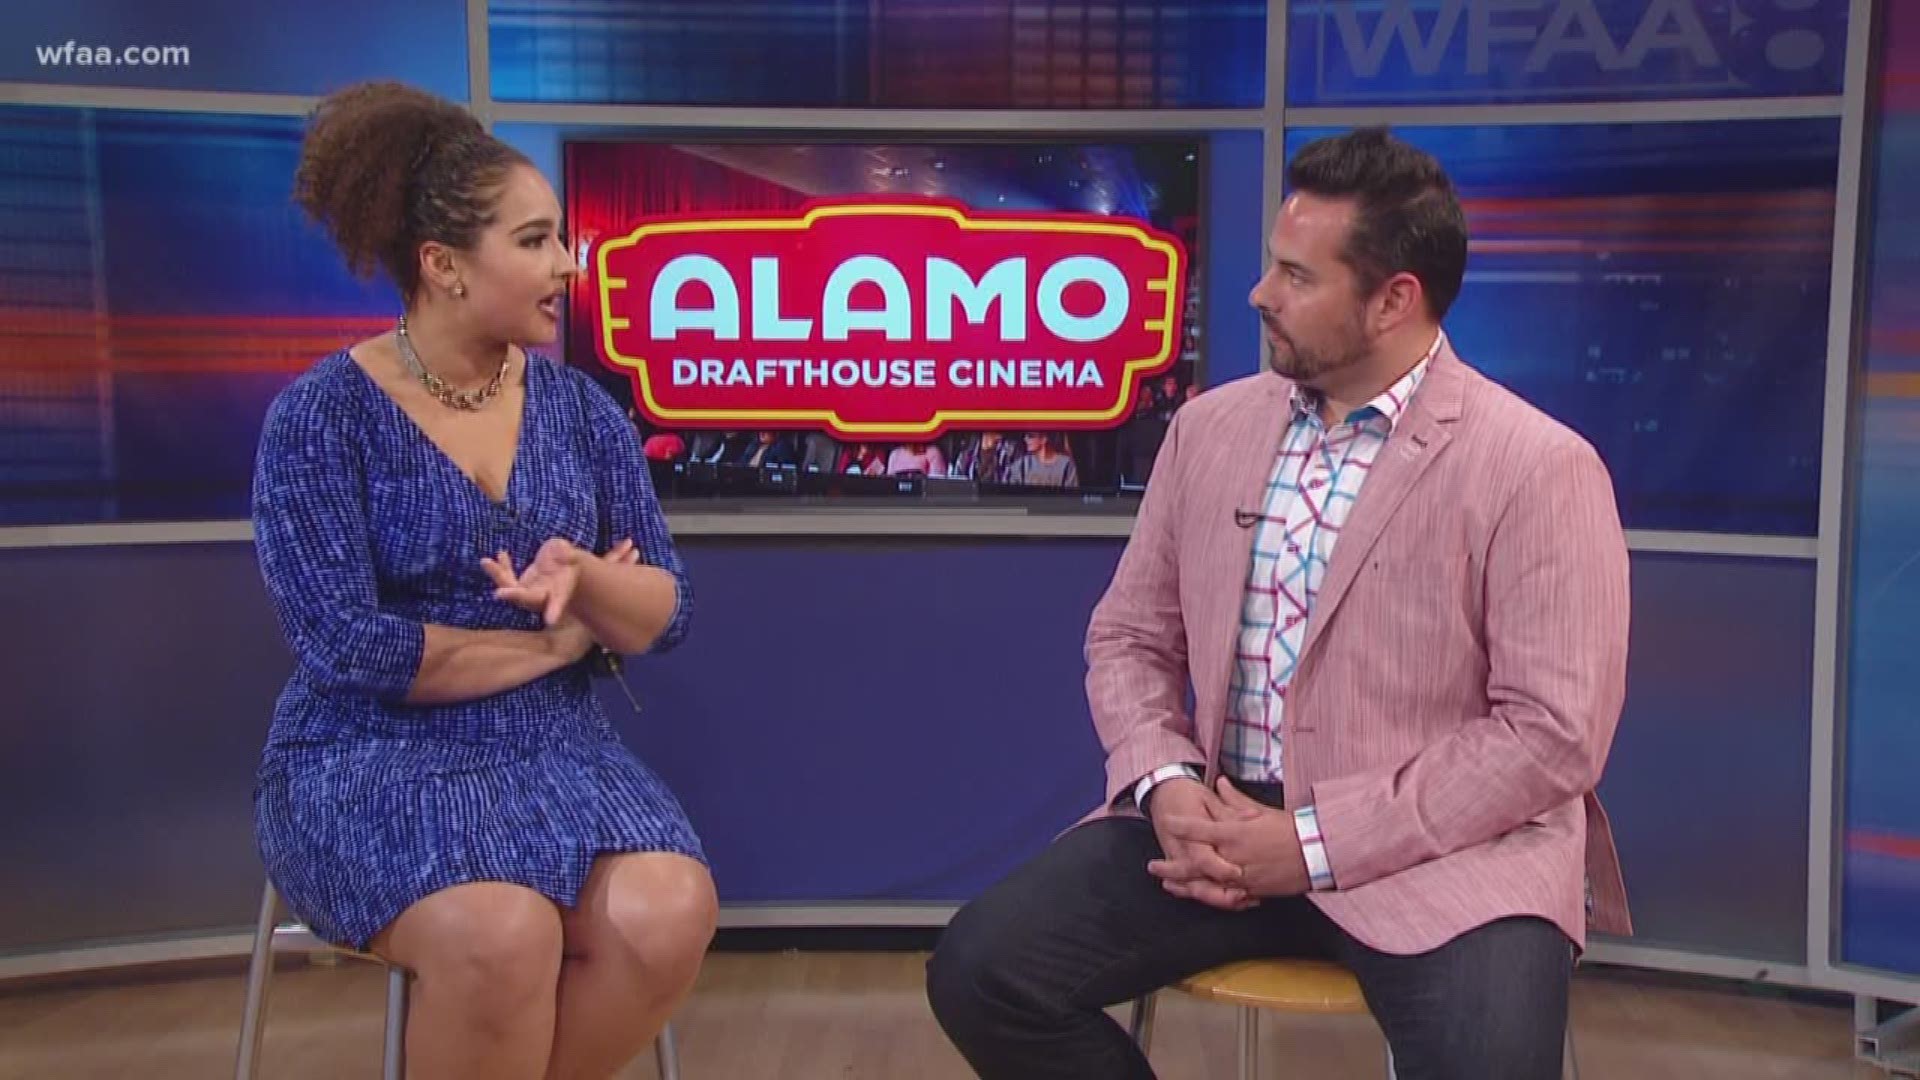 Alamo Drafthouse Cinema expands across DFW